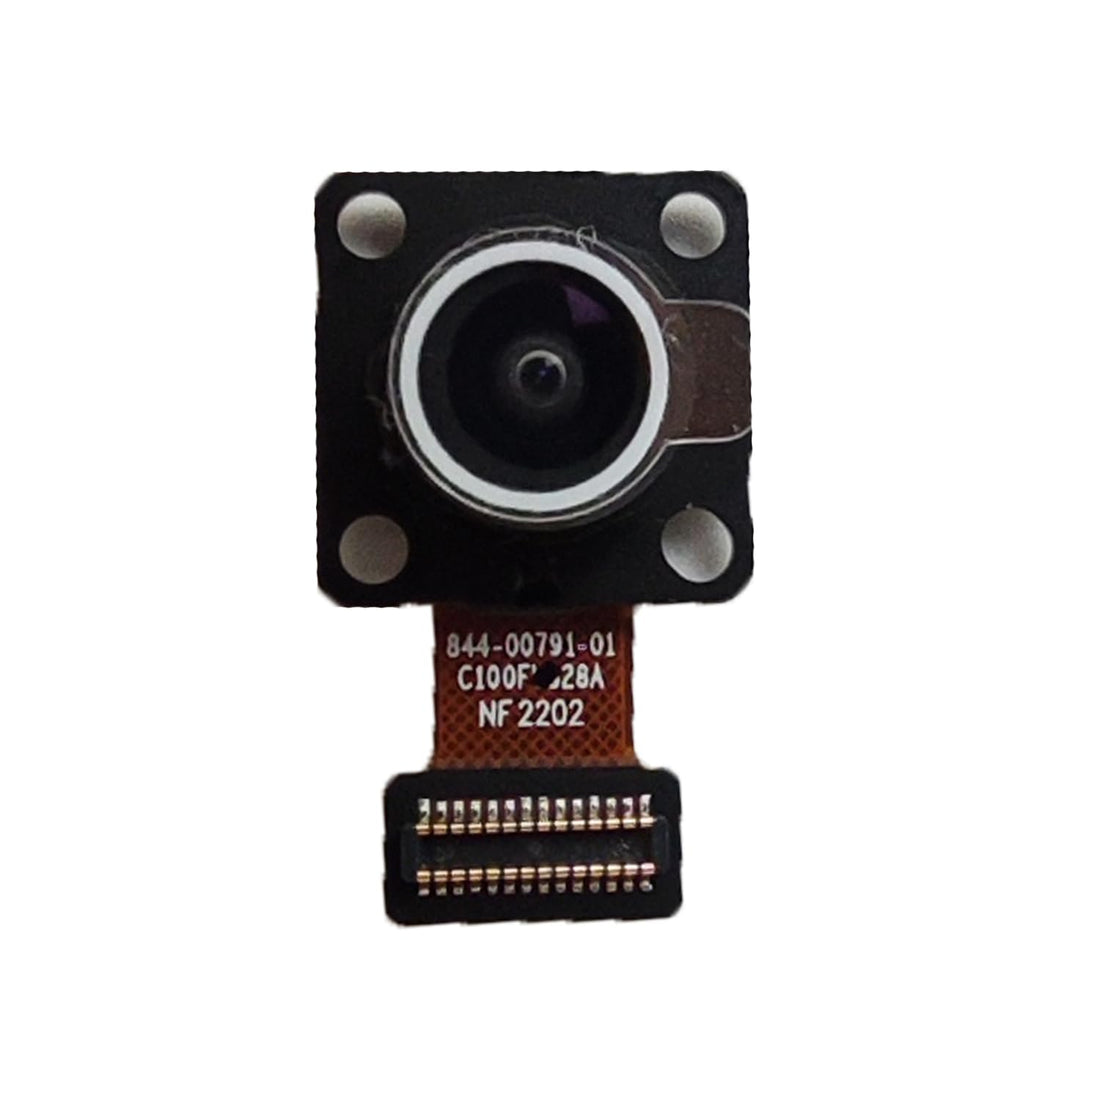 Original Camera Sensor Lens for Oculus Quest 2 VR Headset Assembly Replacement Part 844-00791-01